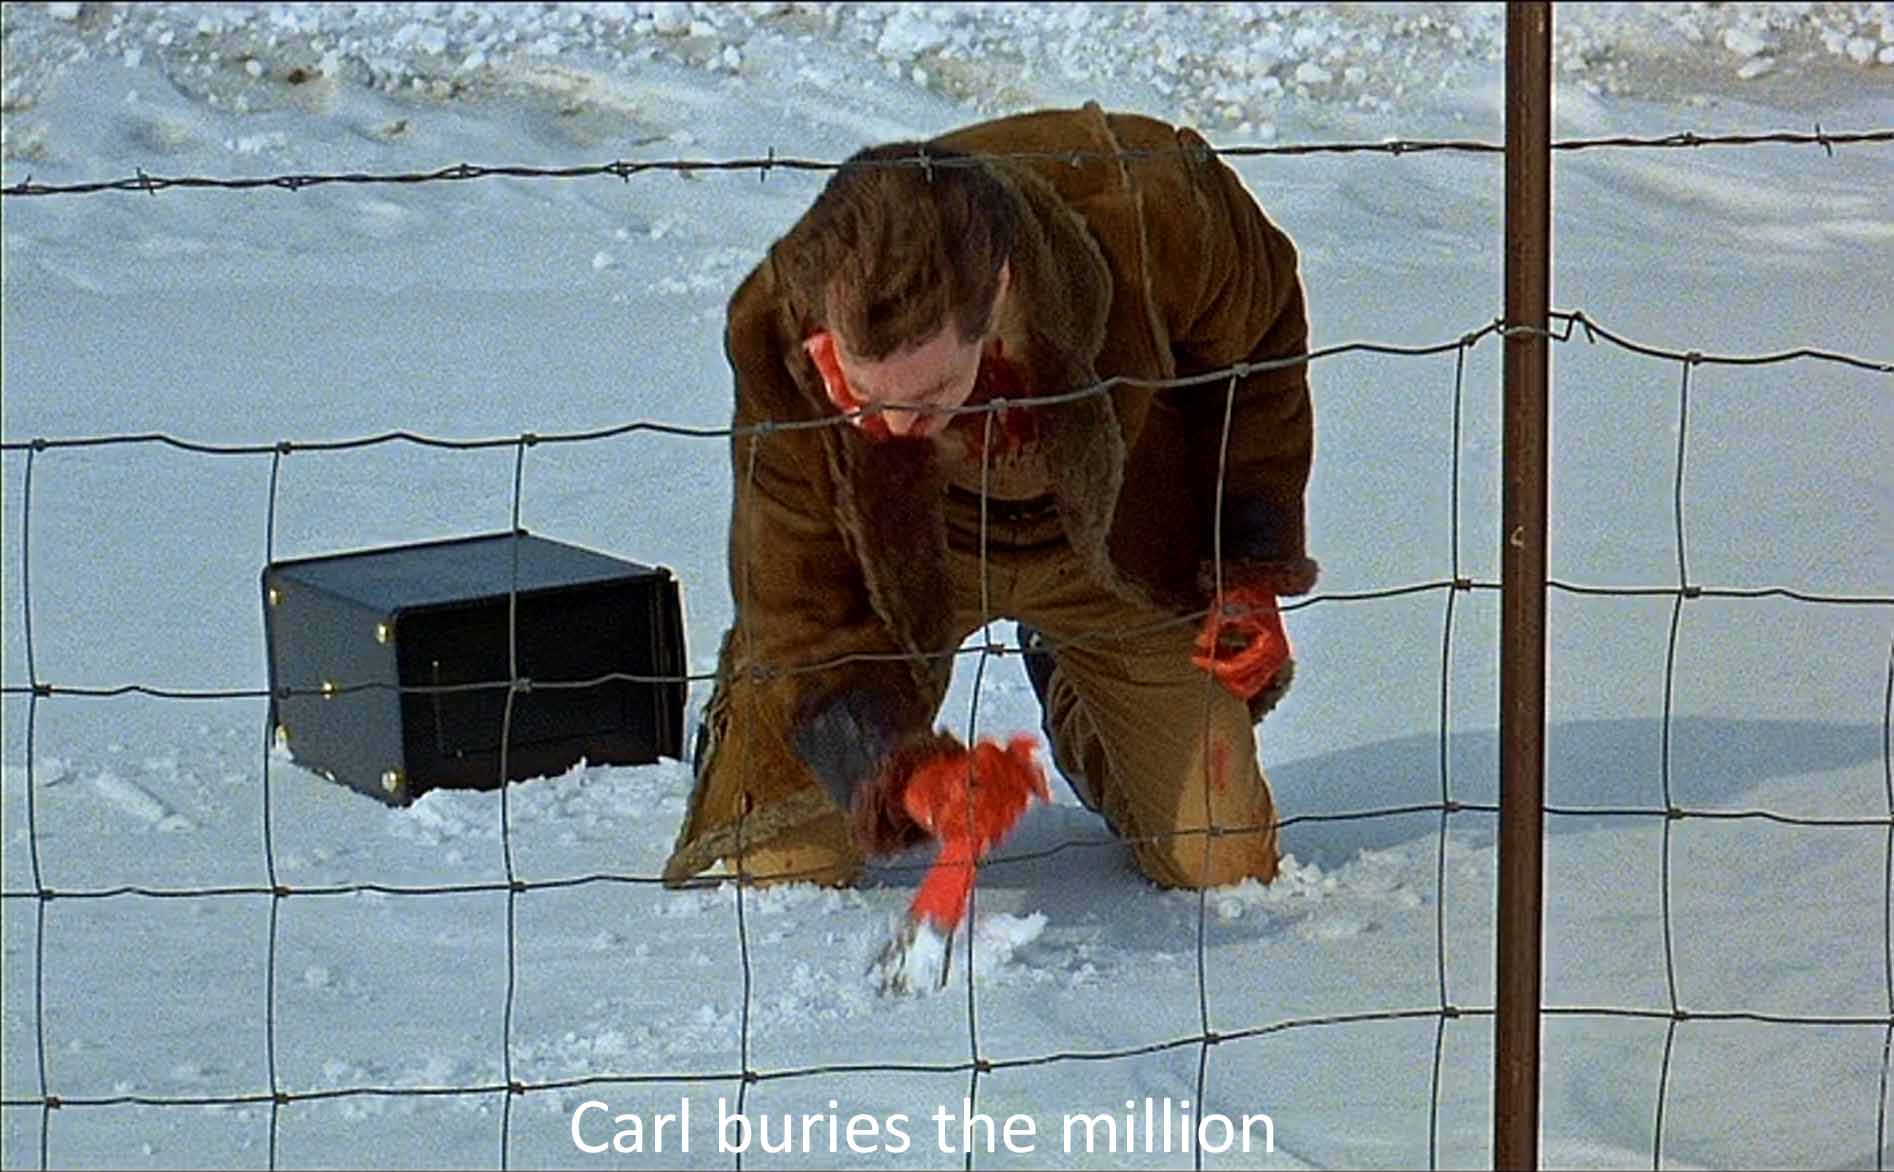 Carl buries the million